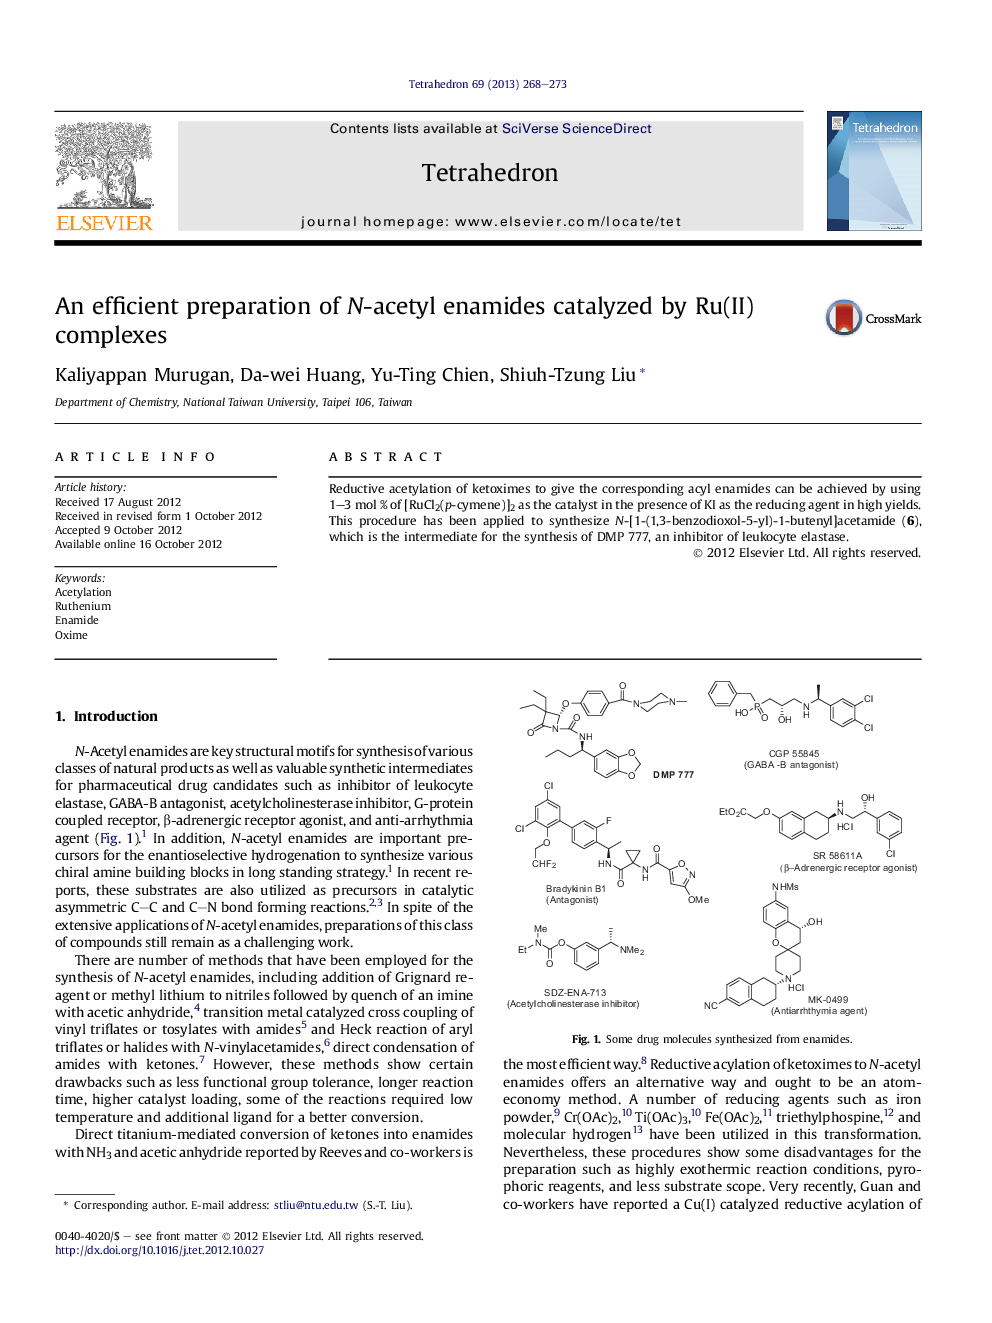 An efficient preparation of N-acetyl enamides catalyzed by Ru(II) complexes